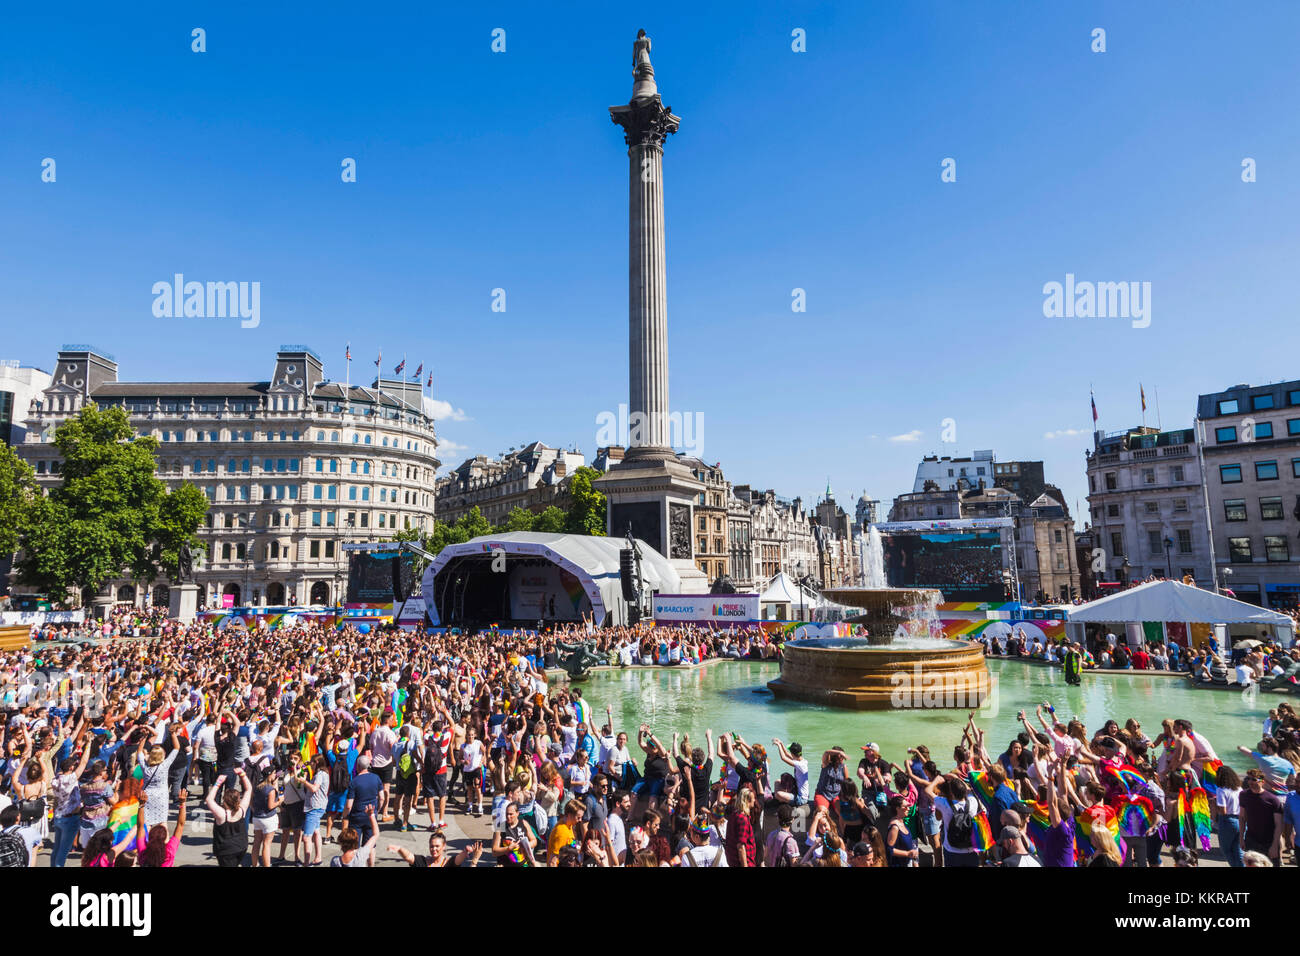 Inglaterra, Londres, Trafalgar Square, gentío celebrando la fiesta del orgullo gay Foto de stock